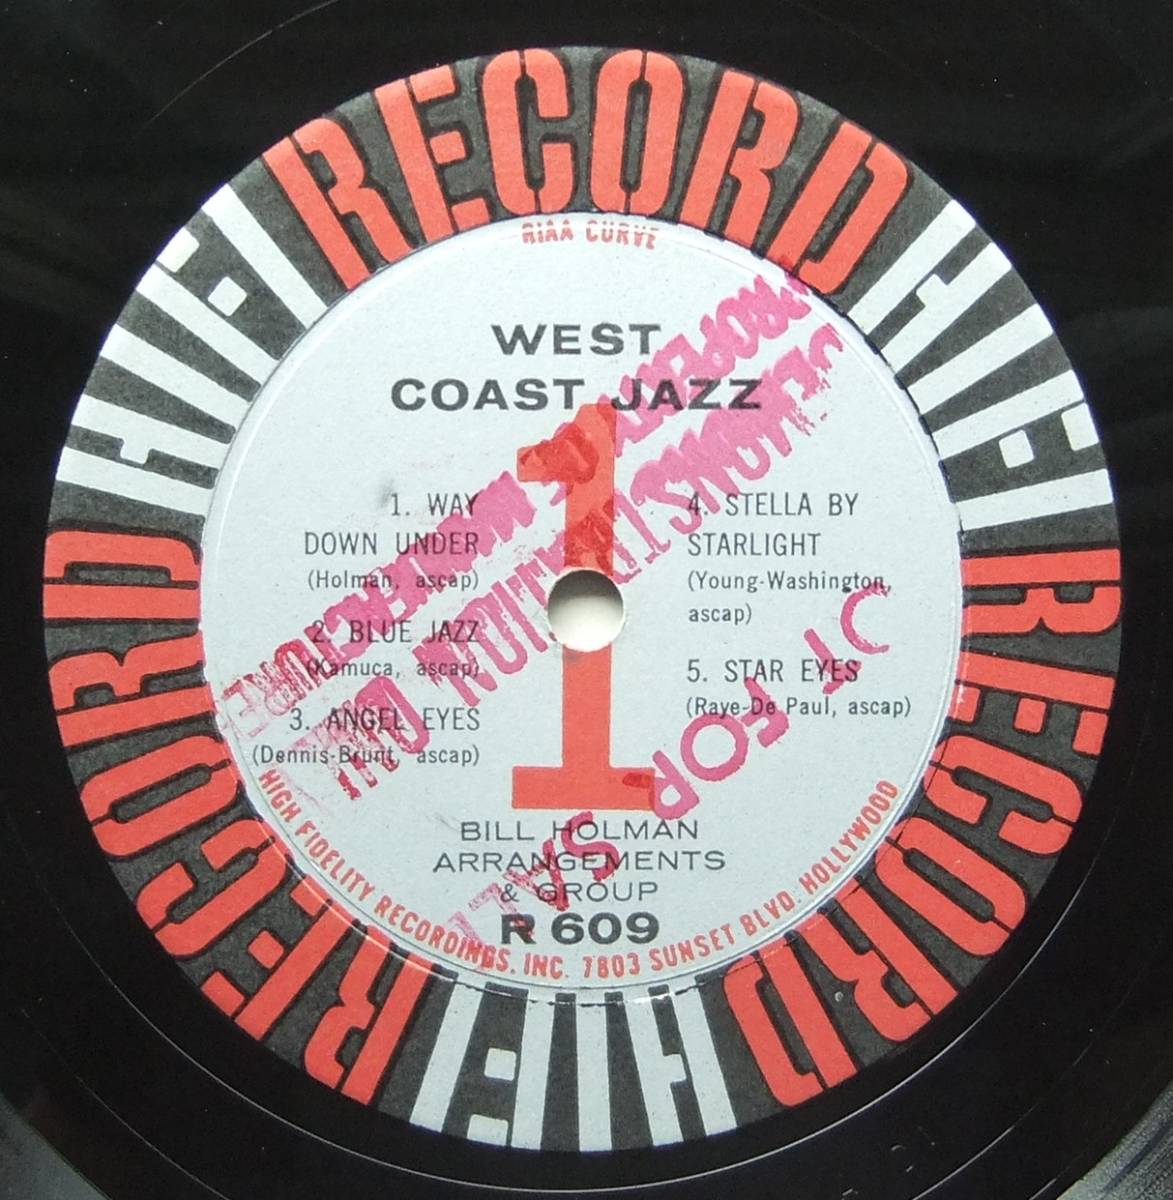 ◆ RICHIE KAMUCA / West Coast Jazz in HiFi ◆ HiFi Record R609 (promo:dg) ◆ W_画像3